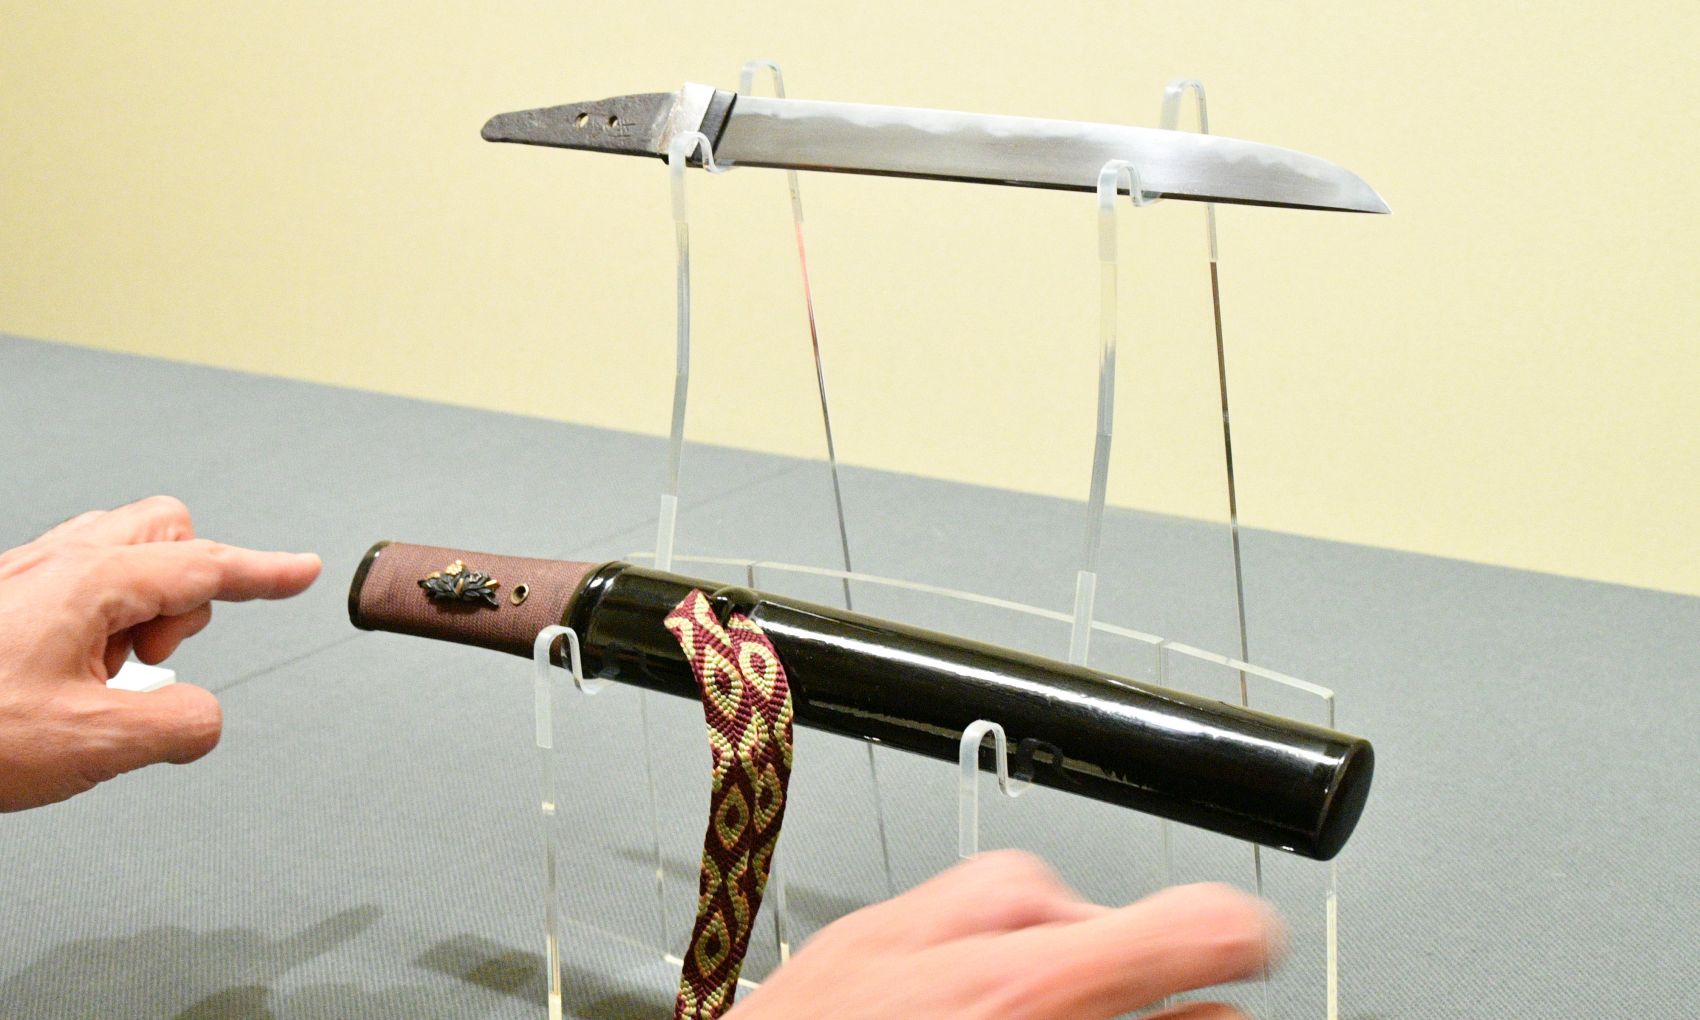 Muramasa Dagger Given By Vladimir Putin to Shinzo Abe on Public Display November 16-18